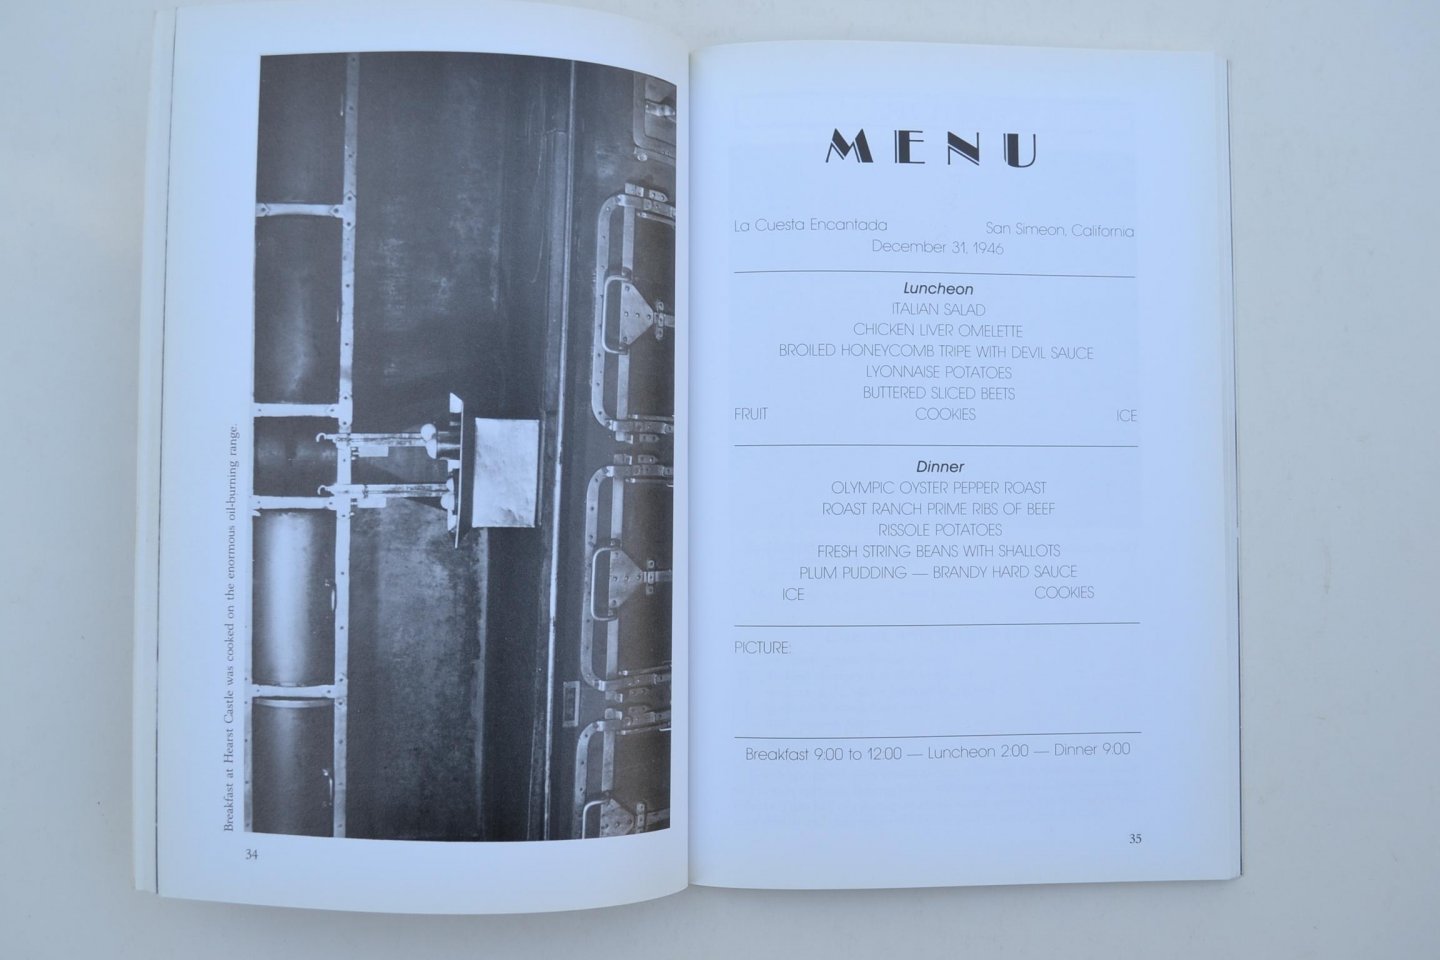 Collard, Marjorie - The Castle Cookbook  Favorite recipes of William Hearst